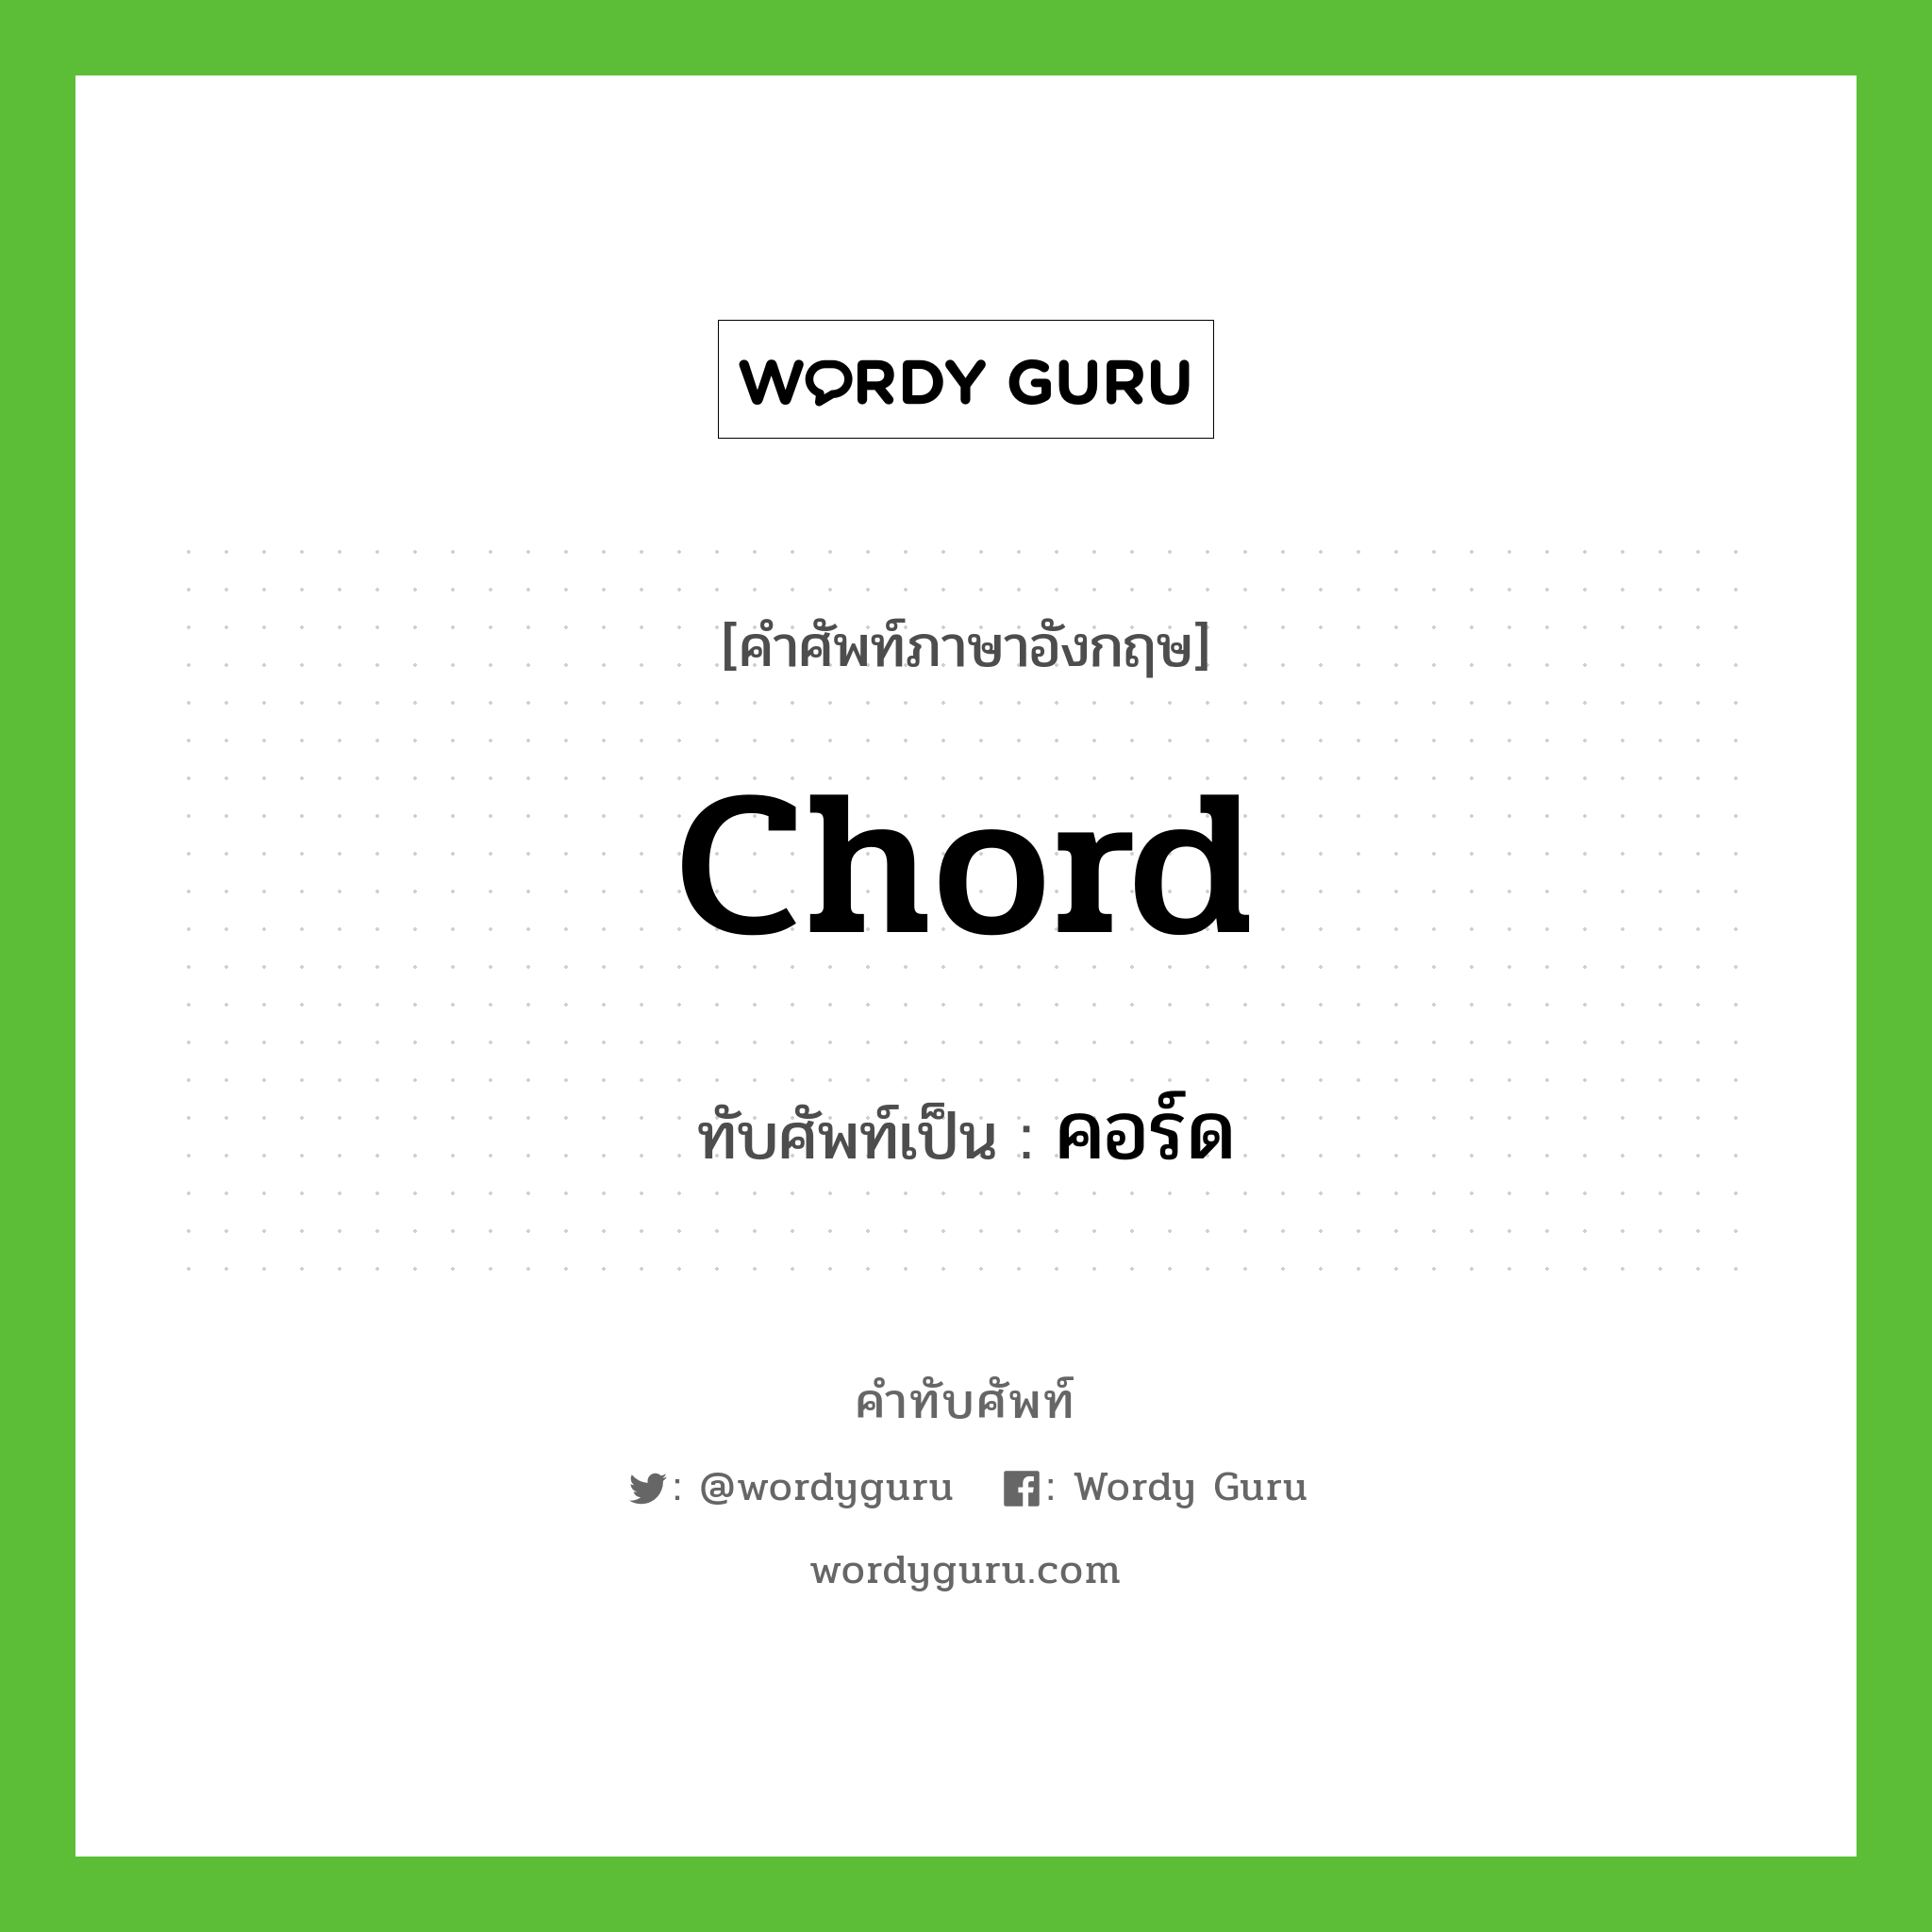 chord เขียนเป็นคำไทยว่าอะไร?, คำศัพท์ภาษาอังกฤษ chord ทับศัพท์เป็น คอร์ด